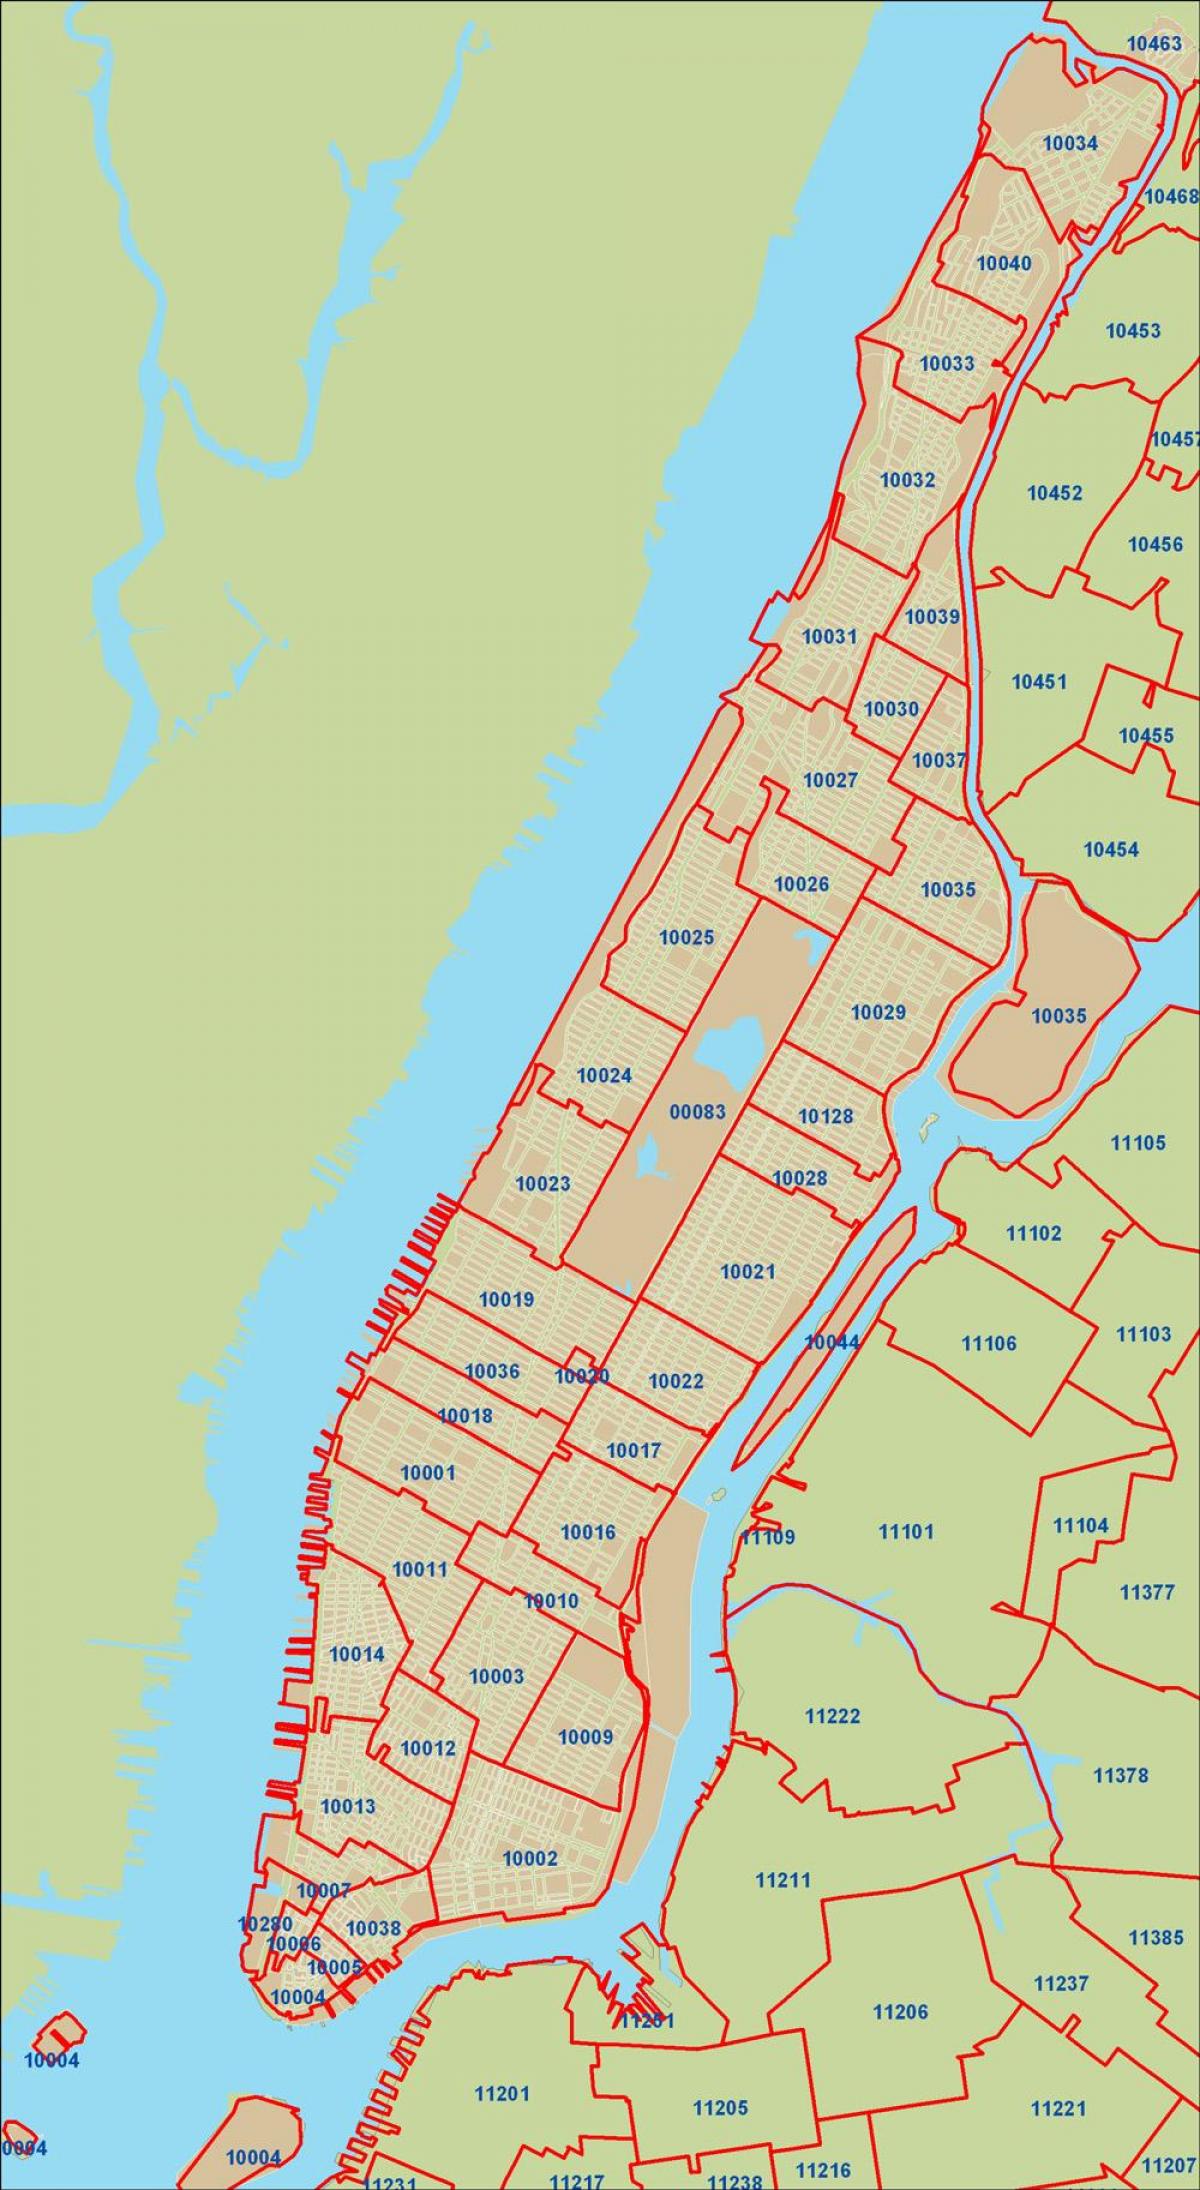 NYC postcode kaart van Manhattan